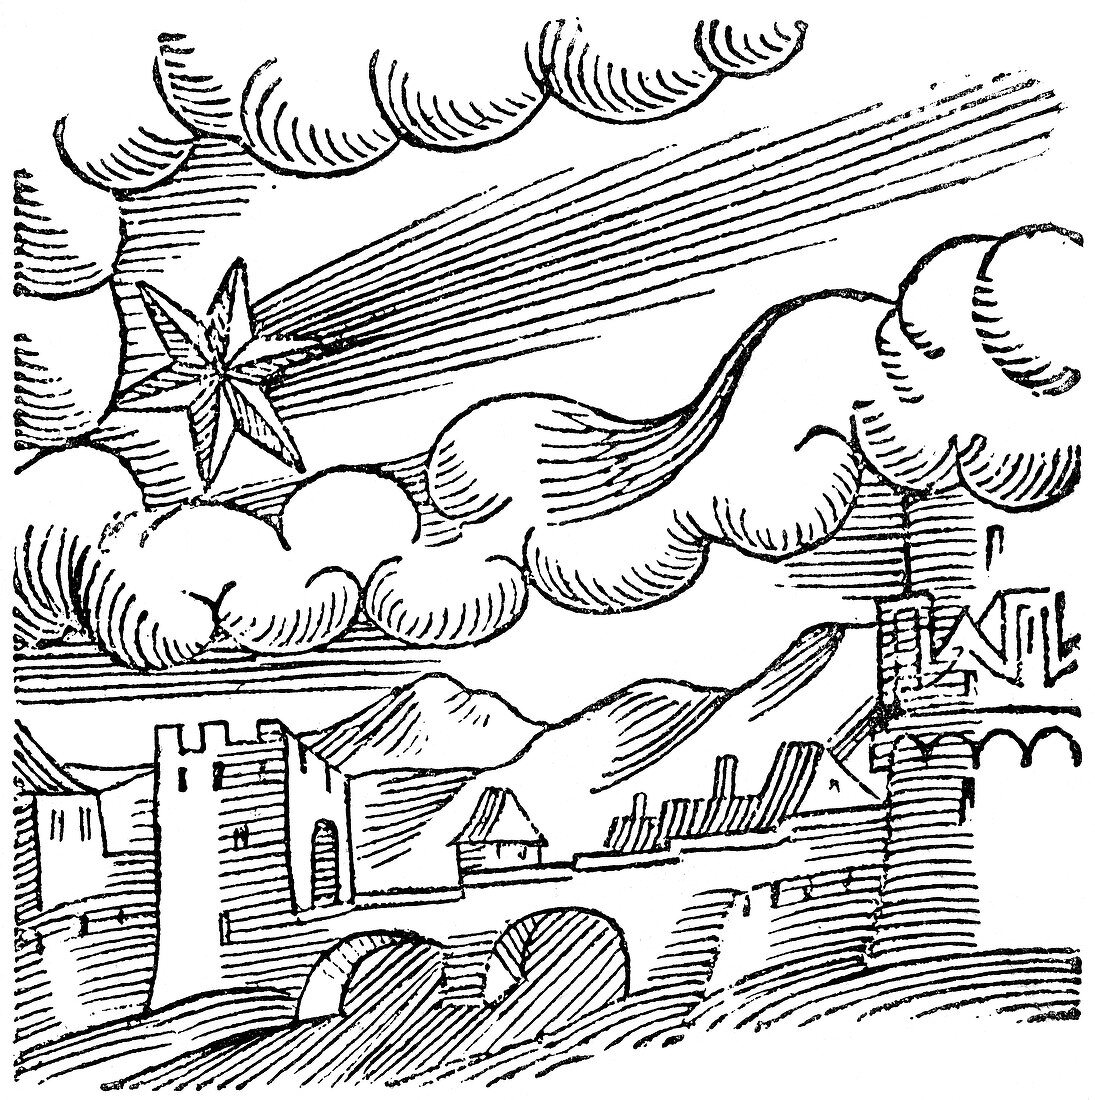 Comet over a castle,16th century